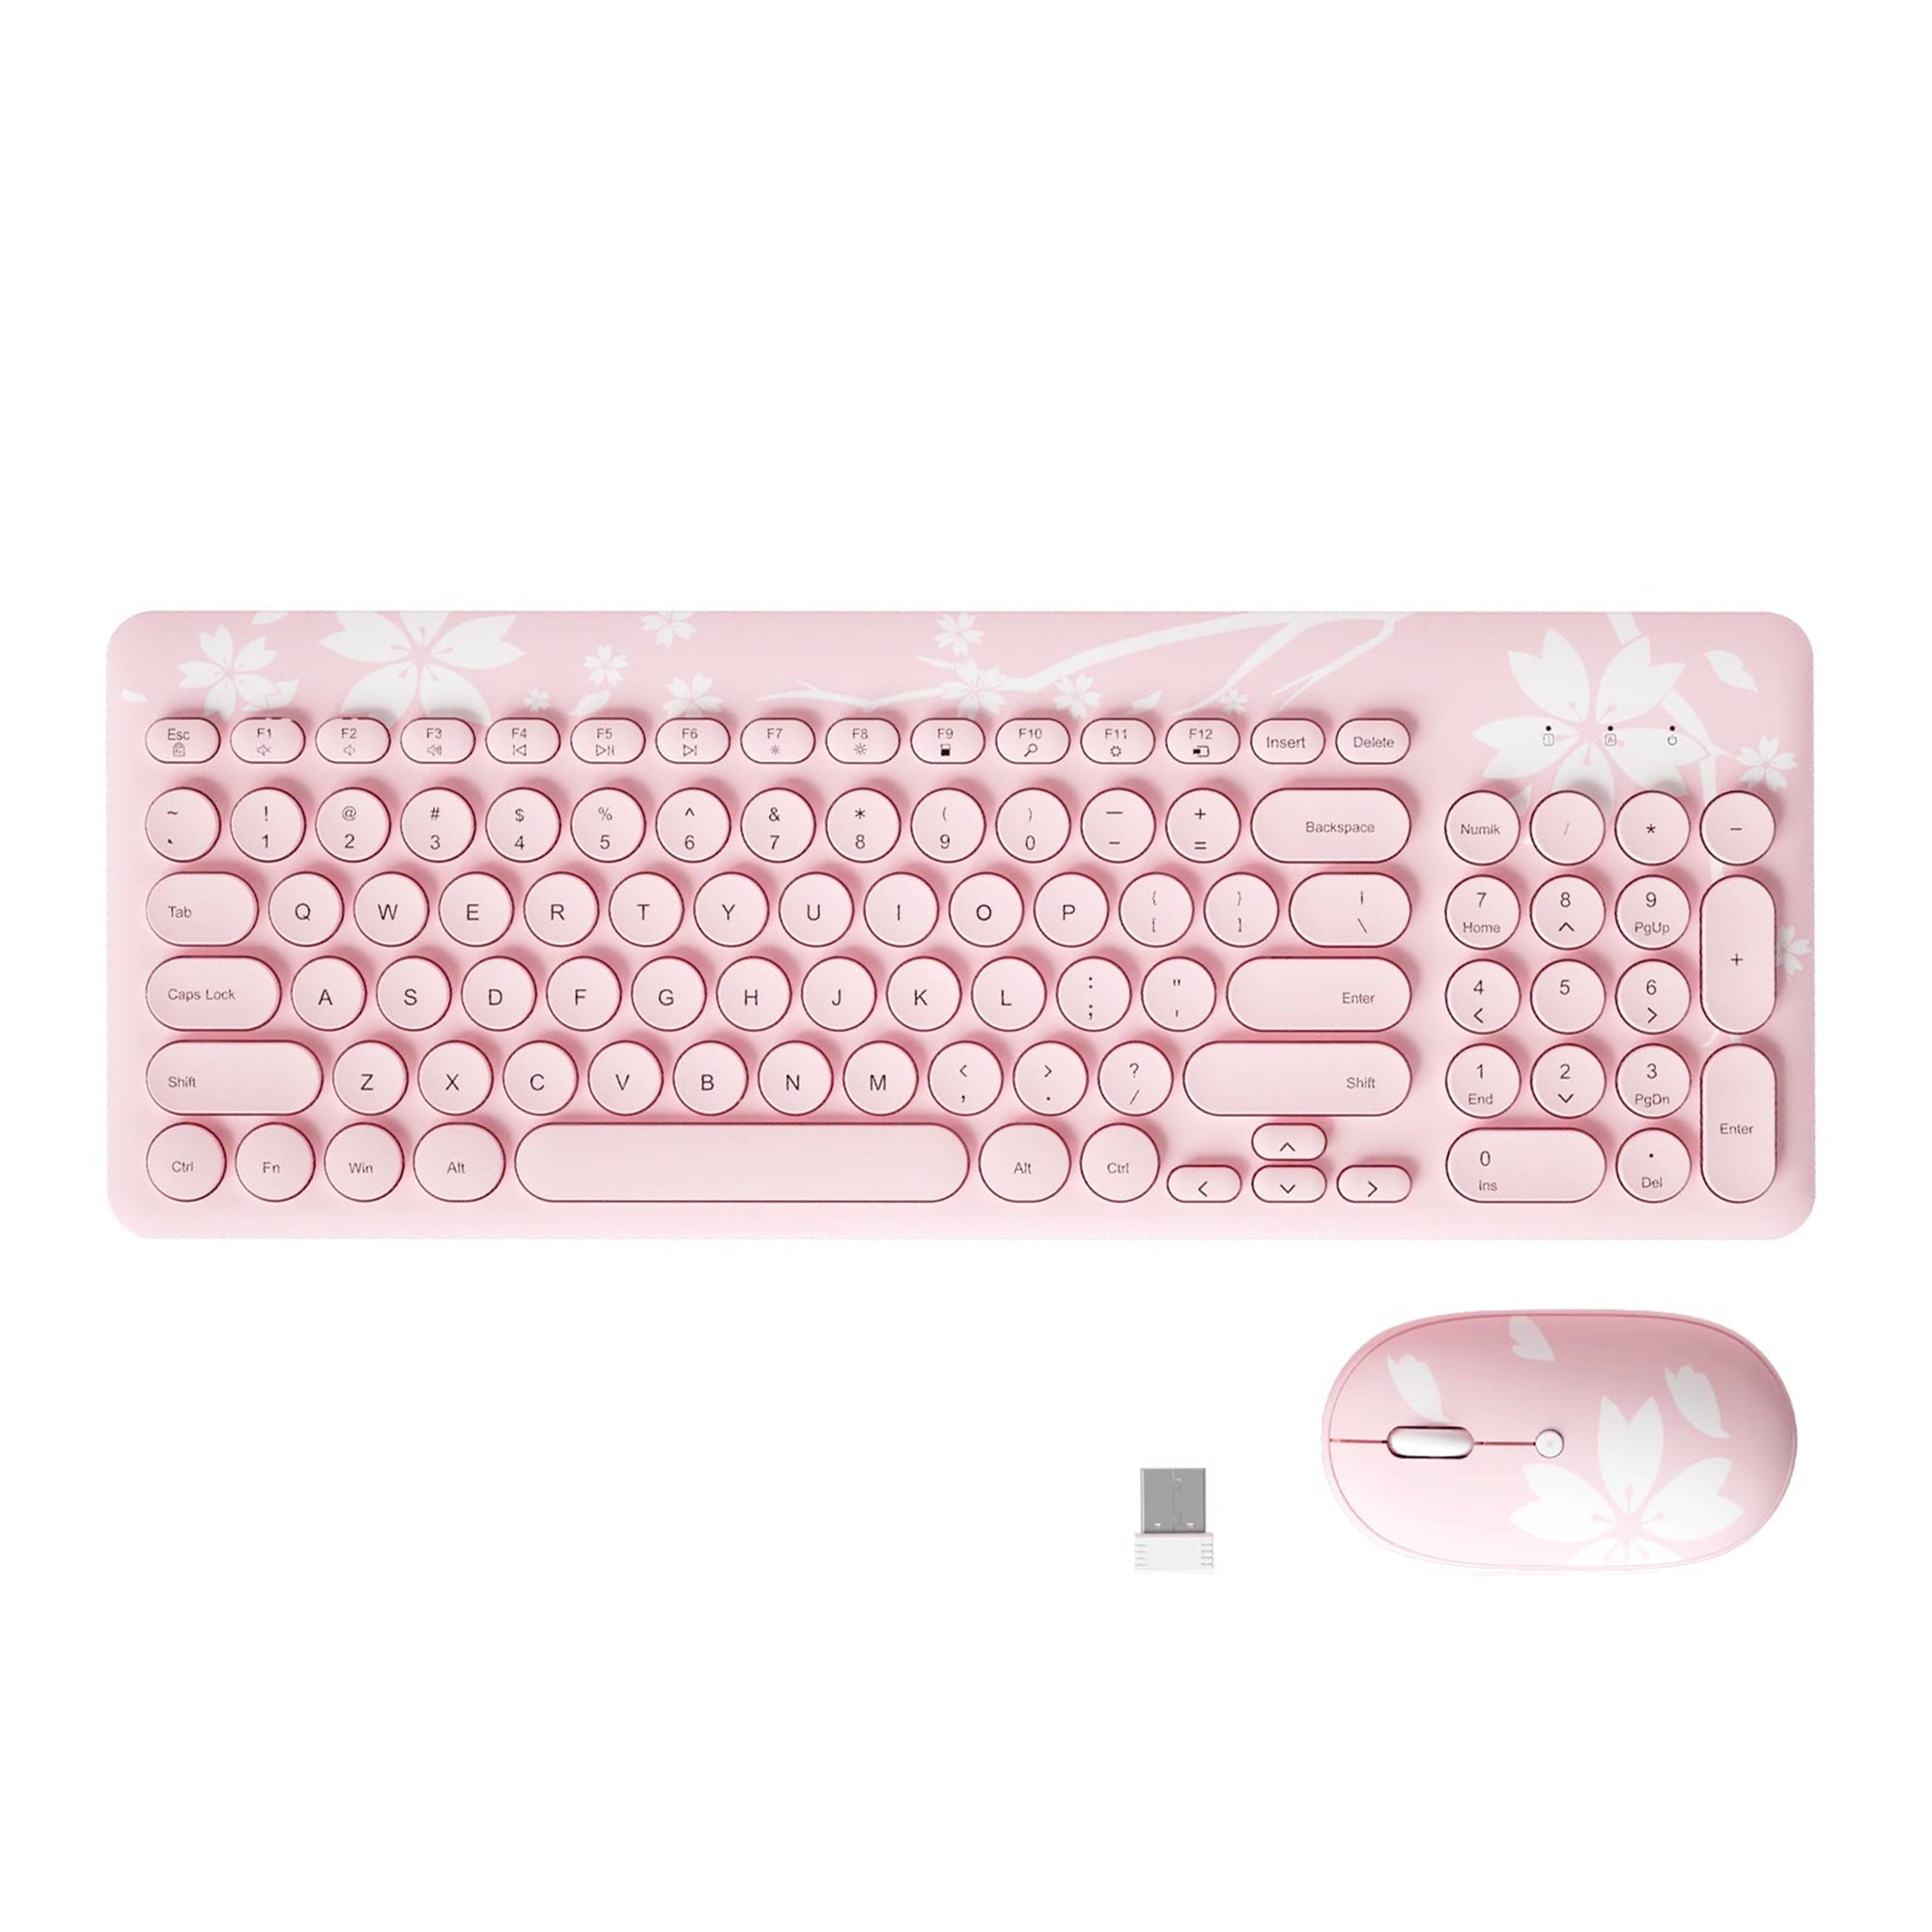 Mytrix Sakura Wireless Keyboard and Mouse Set, Cherry Pink Wireless Mouse and Keyboard Combo, Retro Type-Writer Keys, Silent 96-Key Keyboard